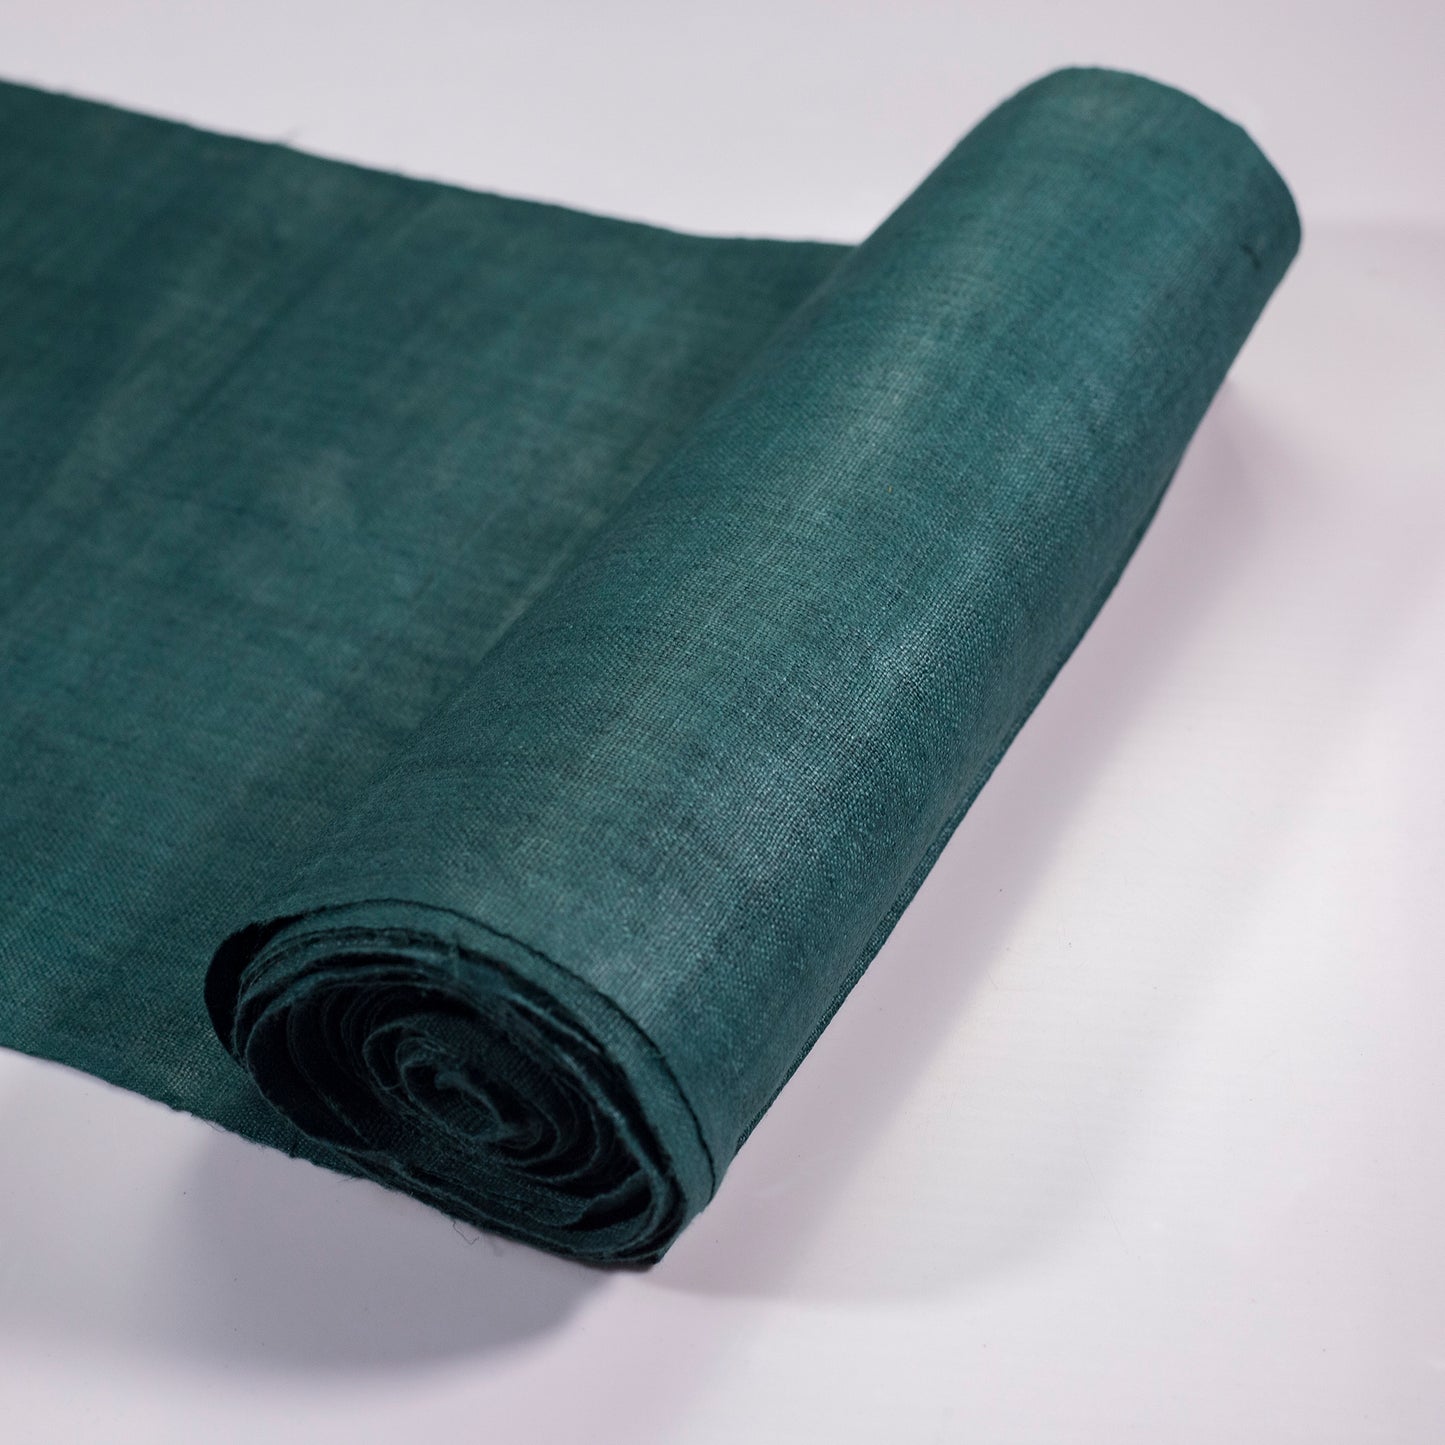 Raw hemp fabric, natural color in BLUE HOSTA